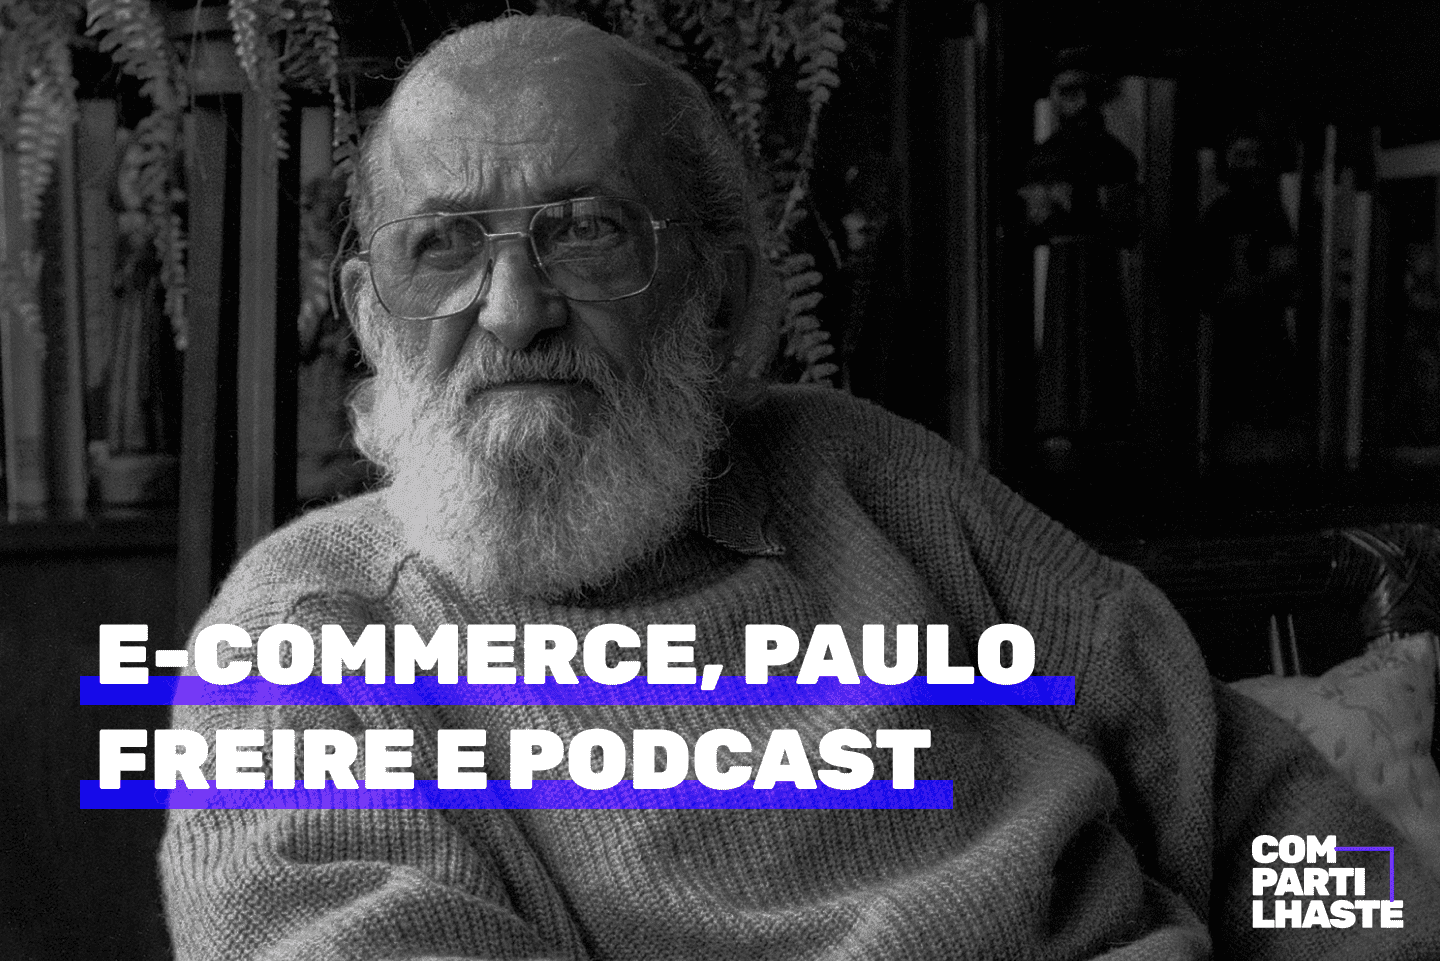 E-commerce, Paulo Freire e podcast.